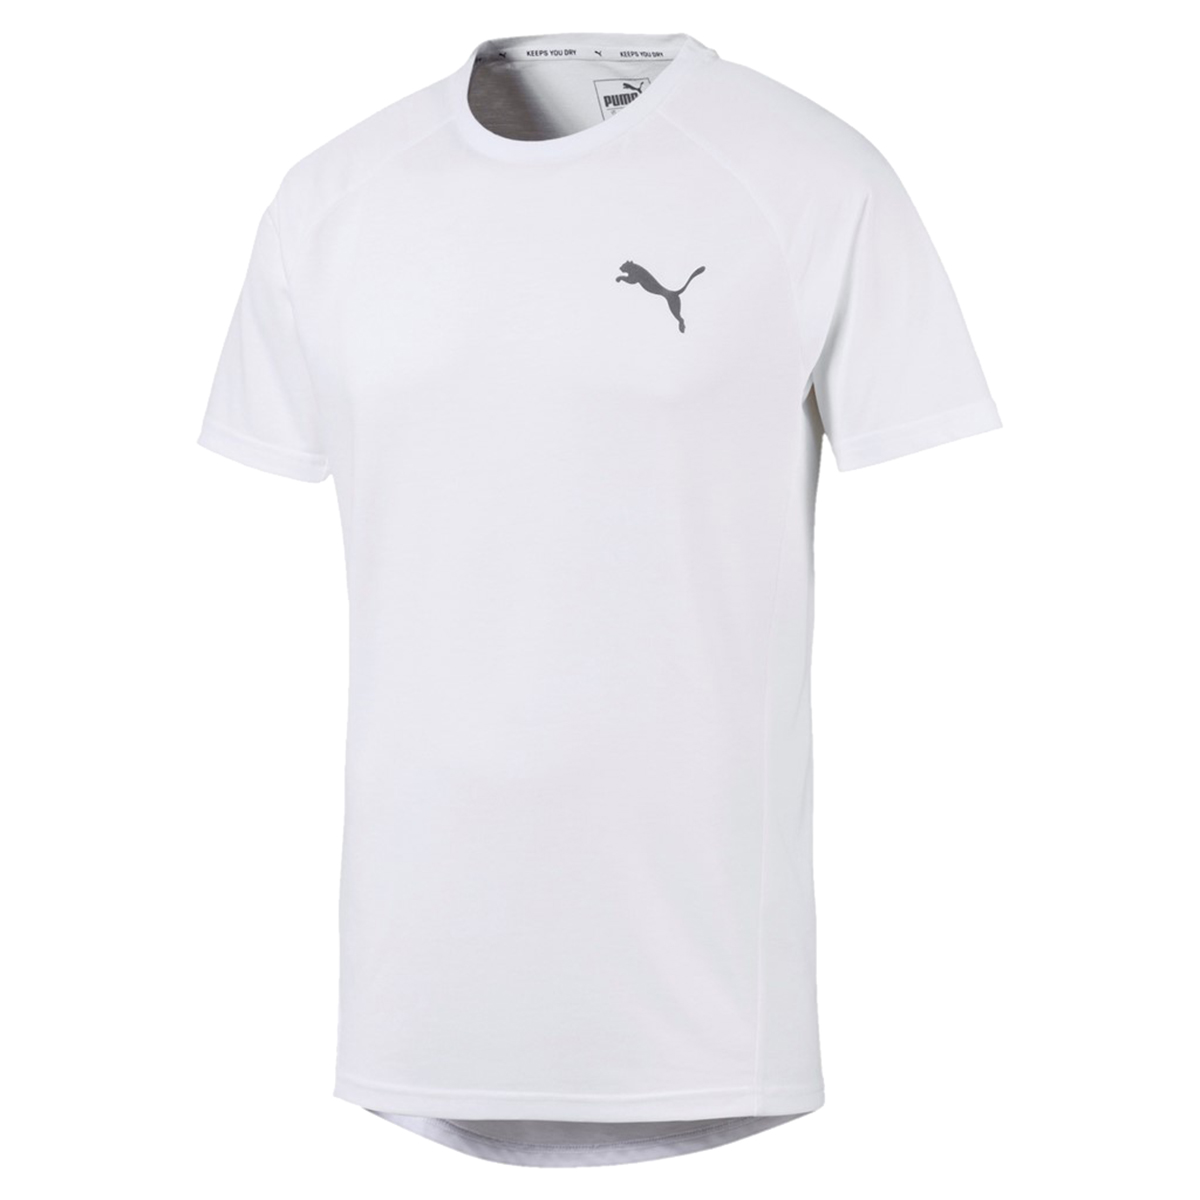 PUMA Evostripe Tee Herren T-shirt Sportswear 580084 02 Weiß